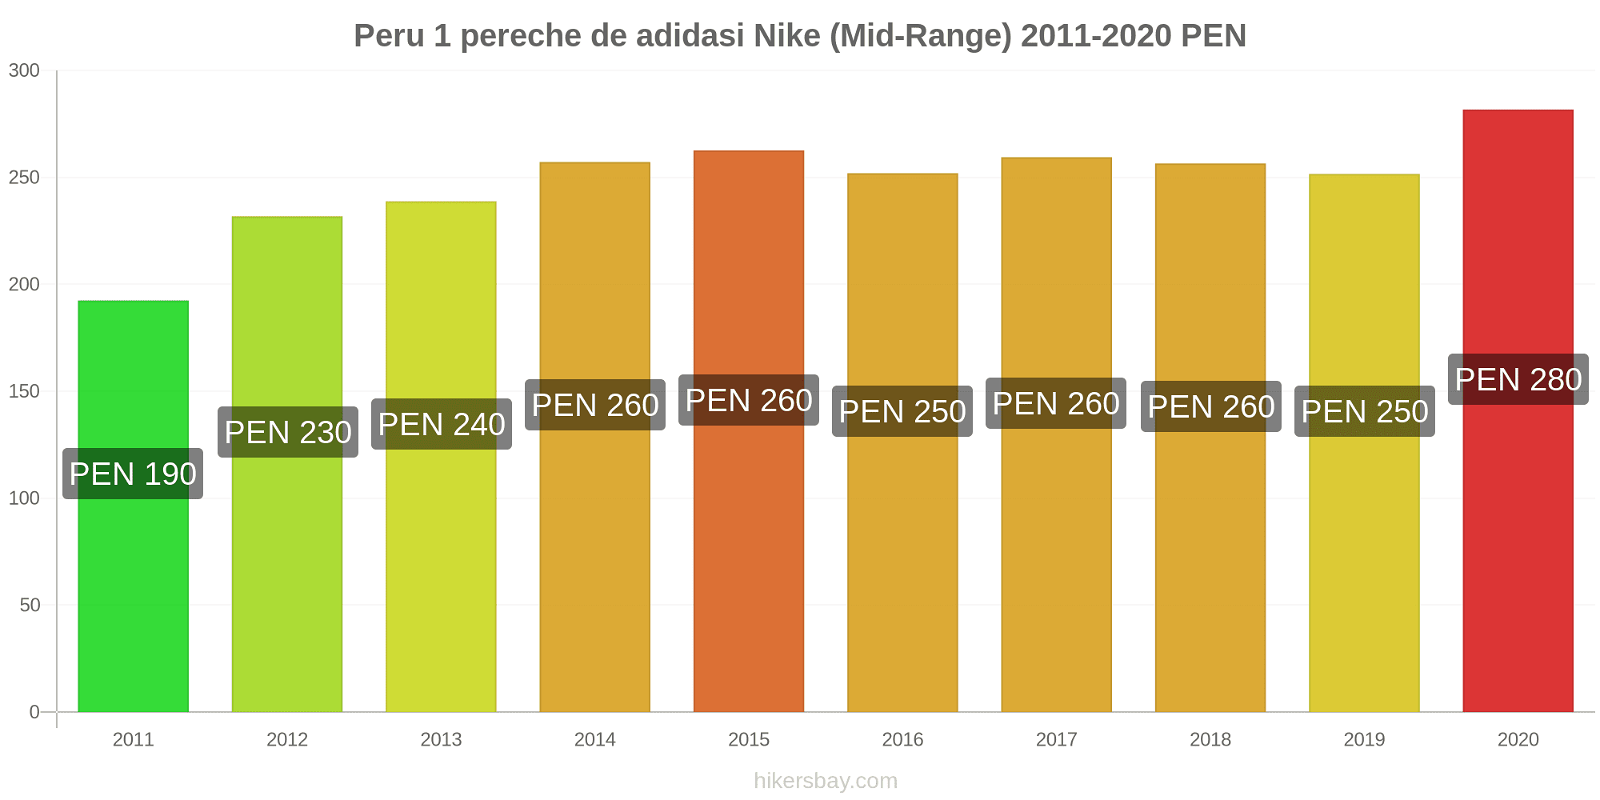 Peru modificări de preț 1 pereche de adidasi Nike (Mid-Range) hikersbay.com